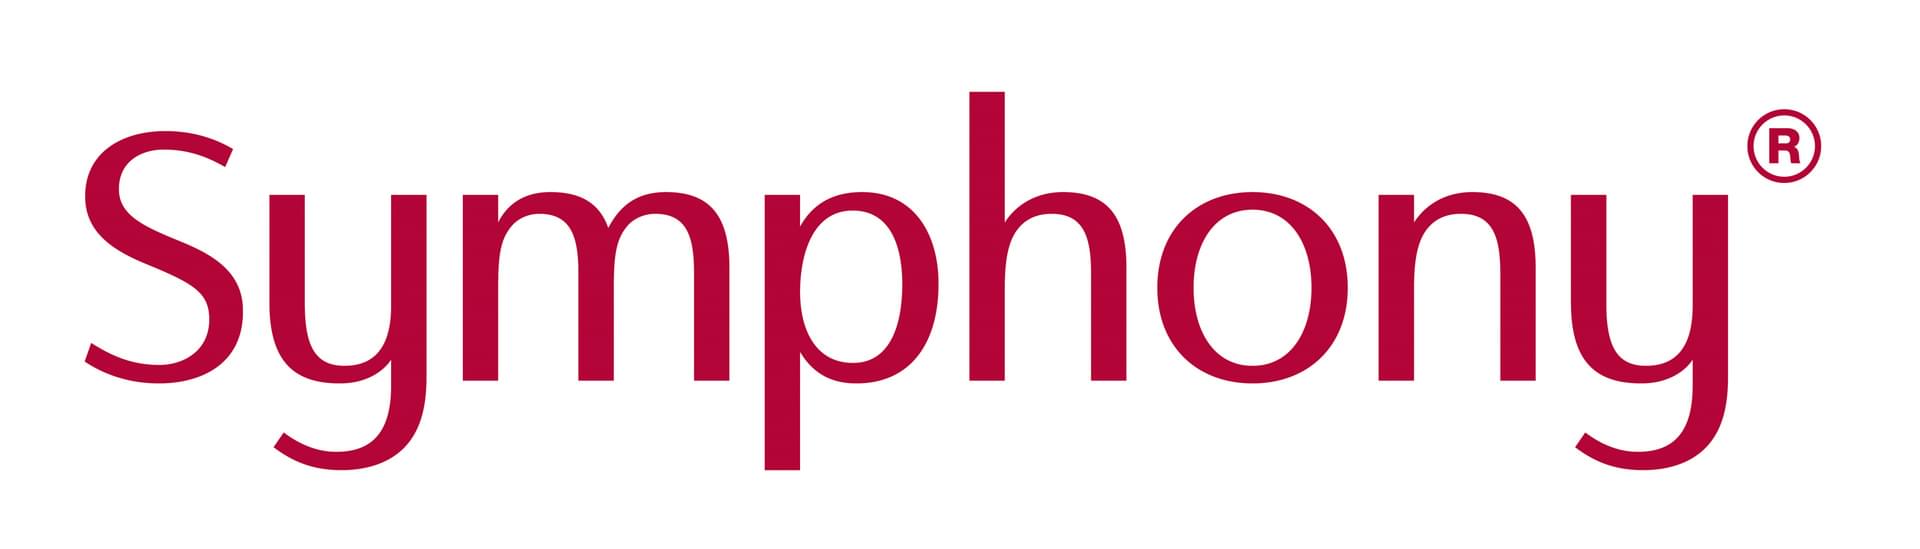 Symphony logo High Res